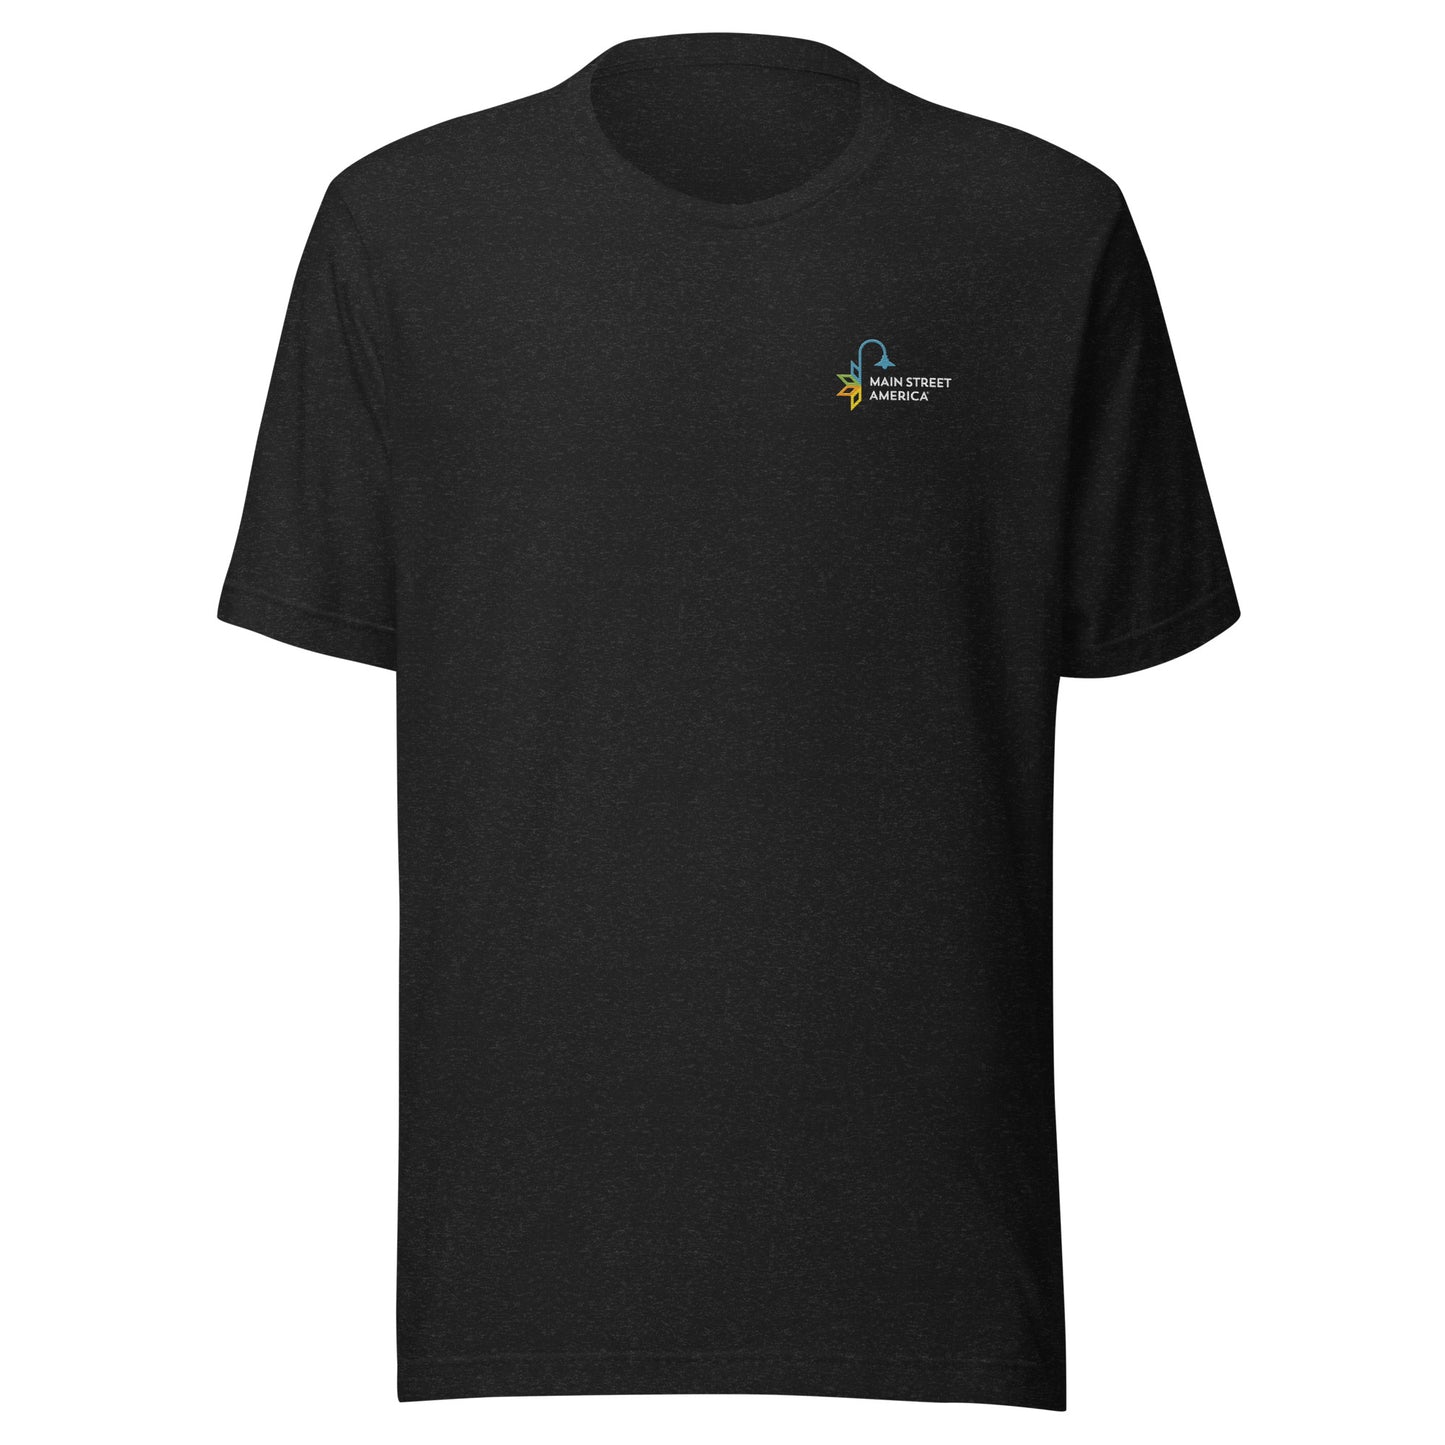 Main Street America Embroidered Unisex T-shirt